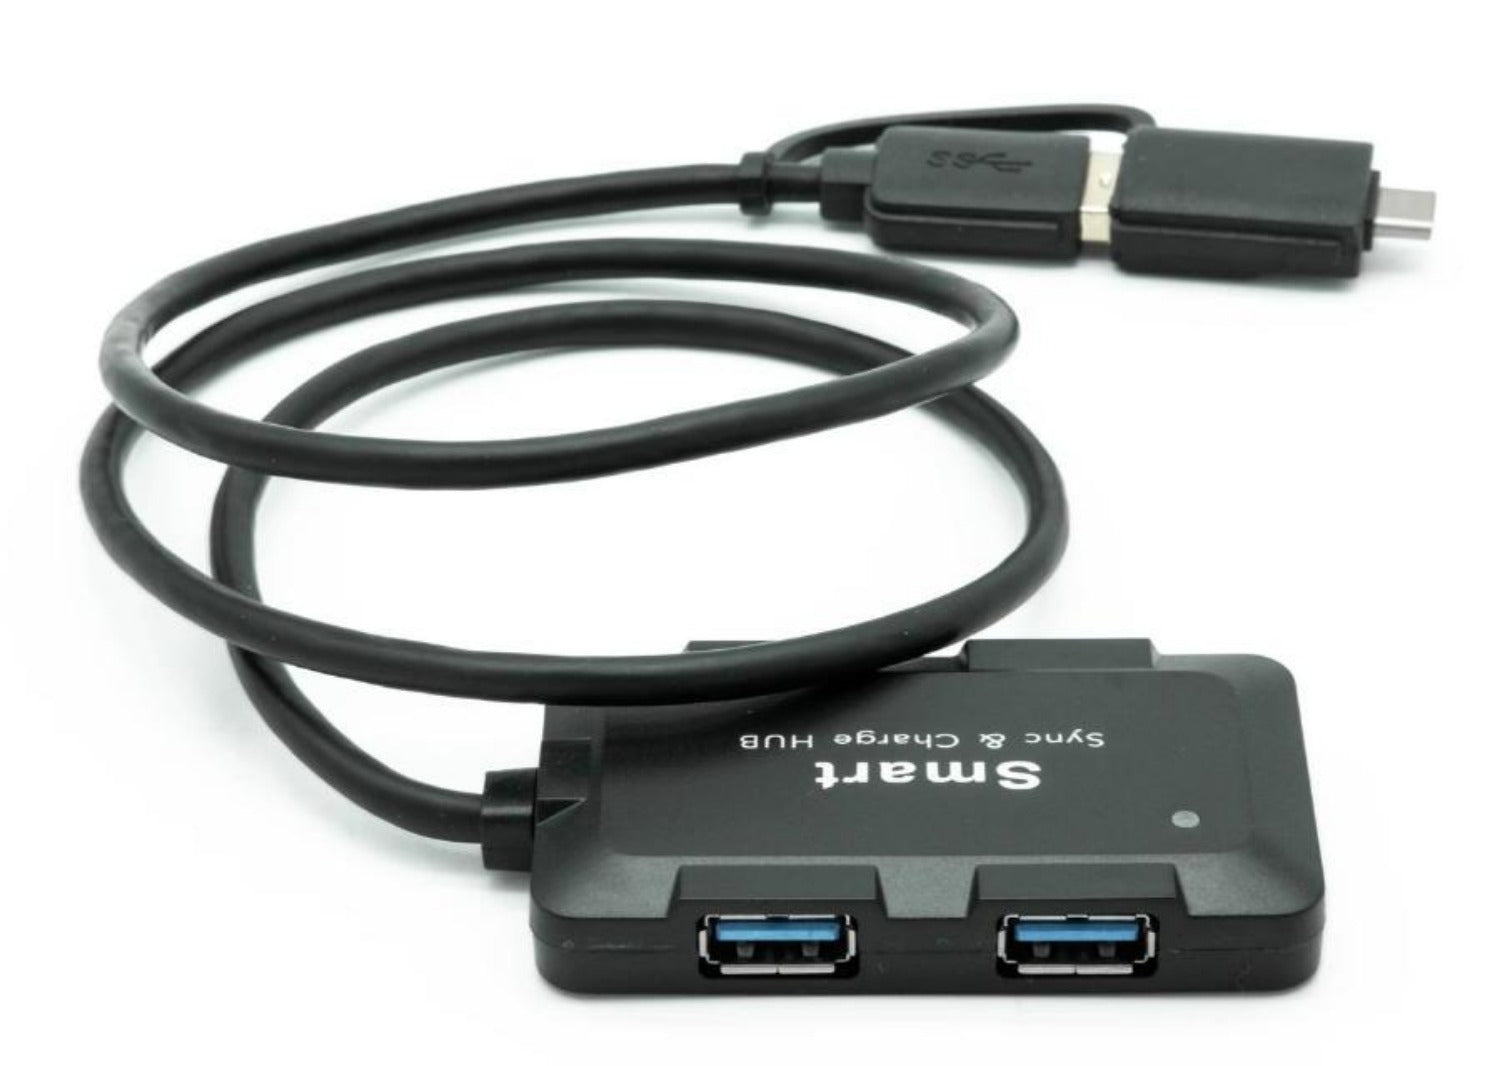 USB Type-C to USB3 hub